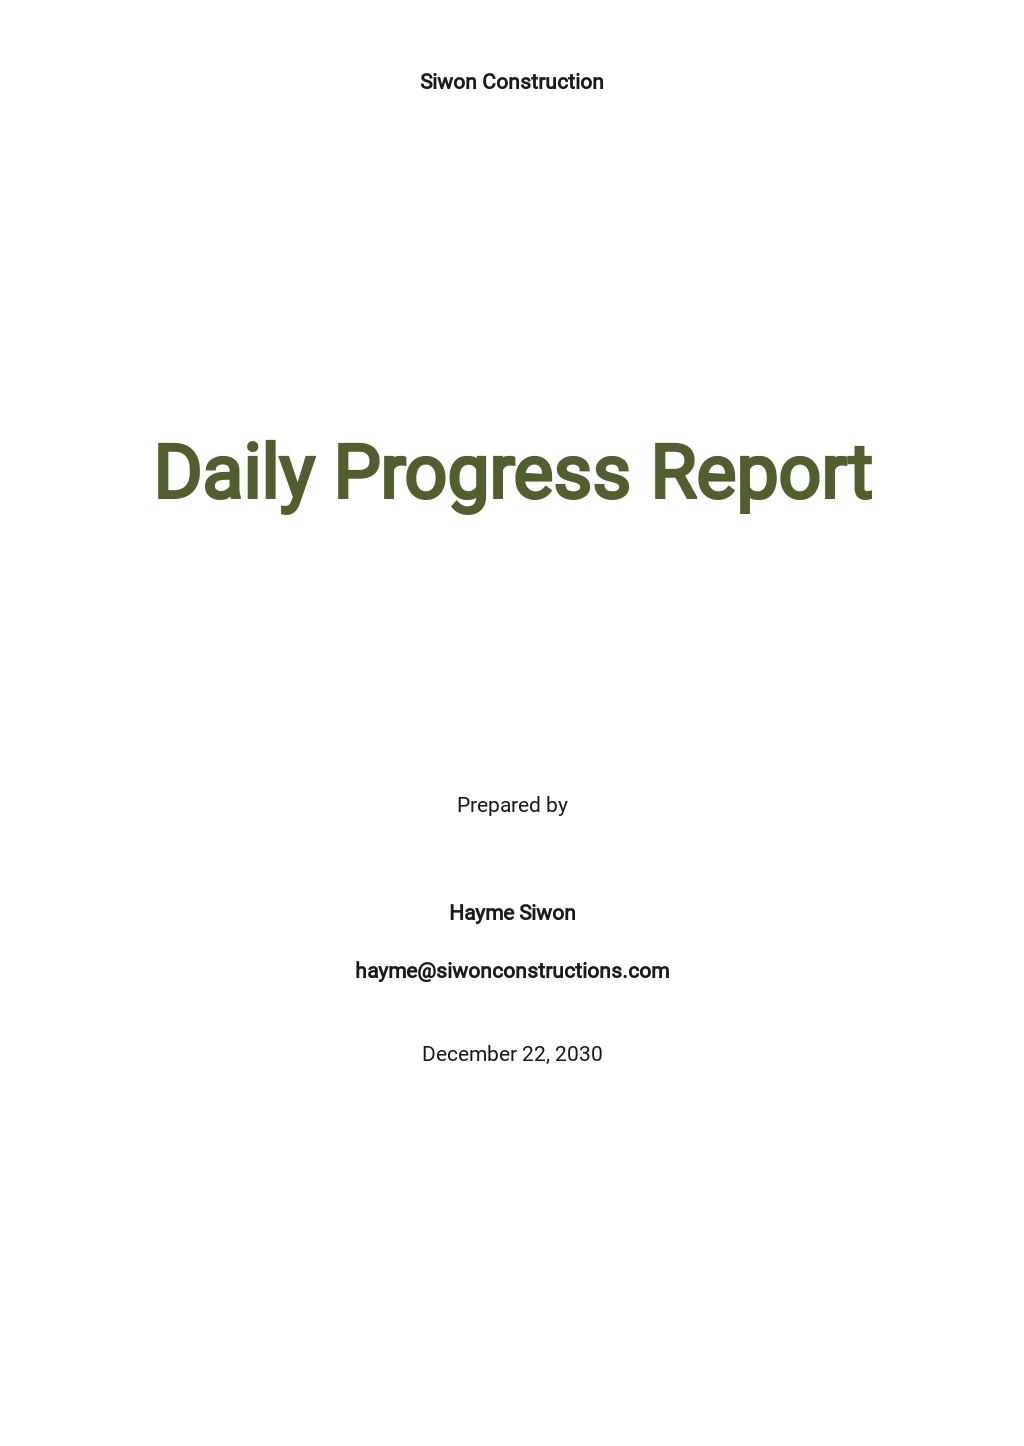 Daily Progress Report Template.jpe